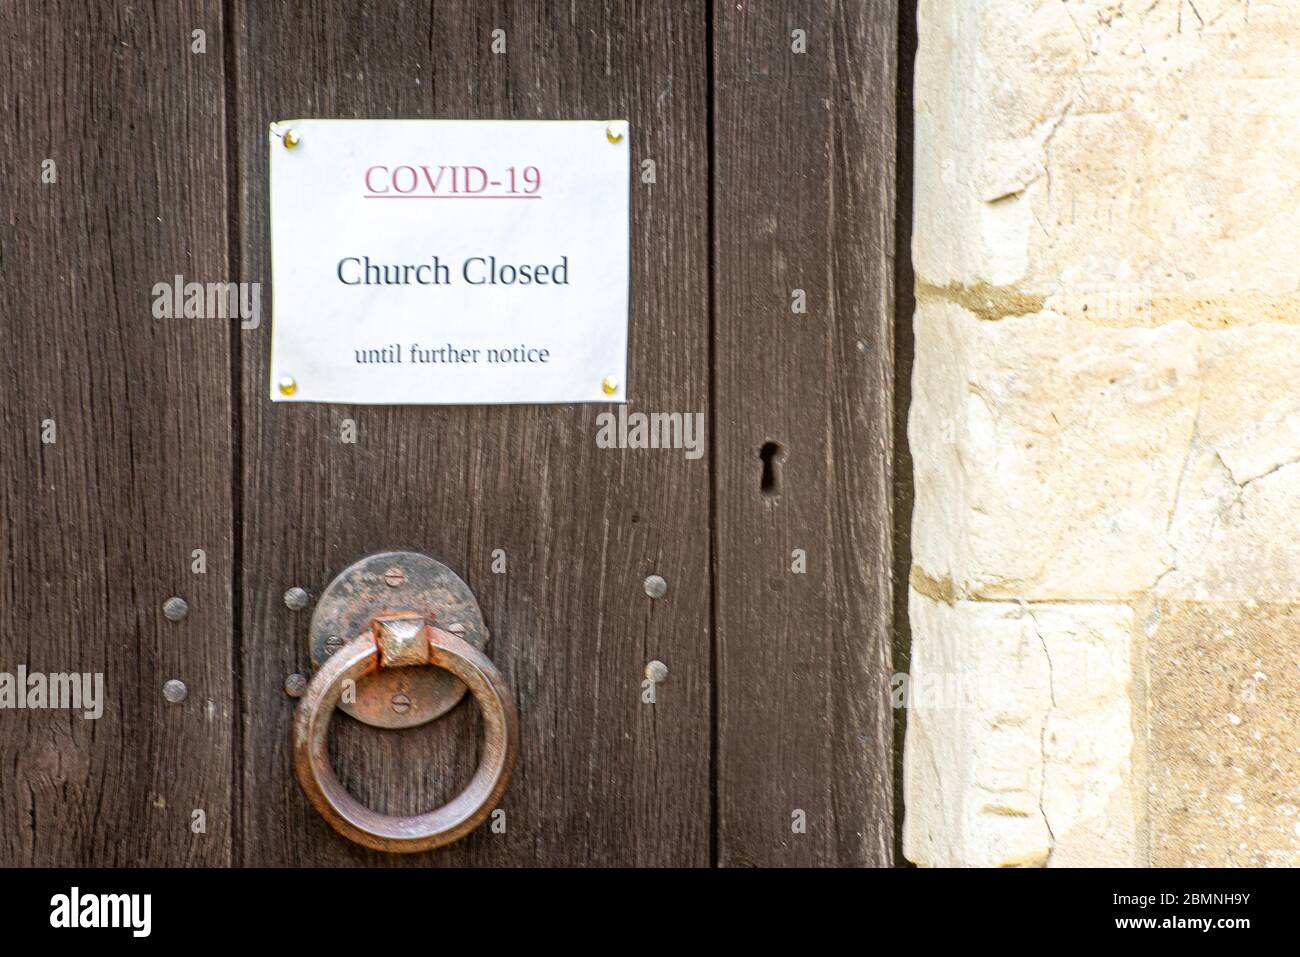 Coronovirus sign, church closed due to Covid-19, St James's Church, Upper Wield, Hampshire, UK Stock Photo